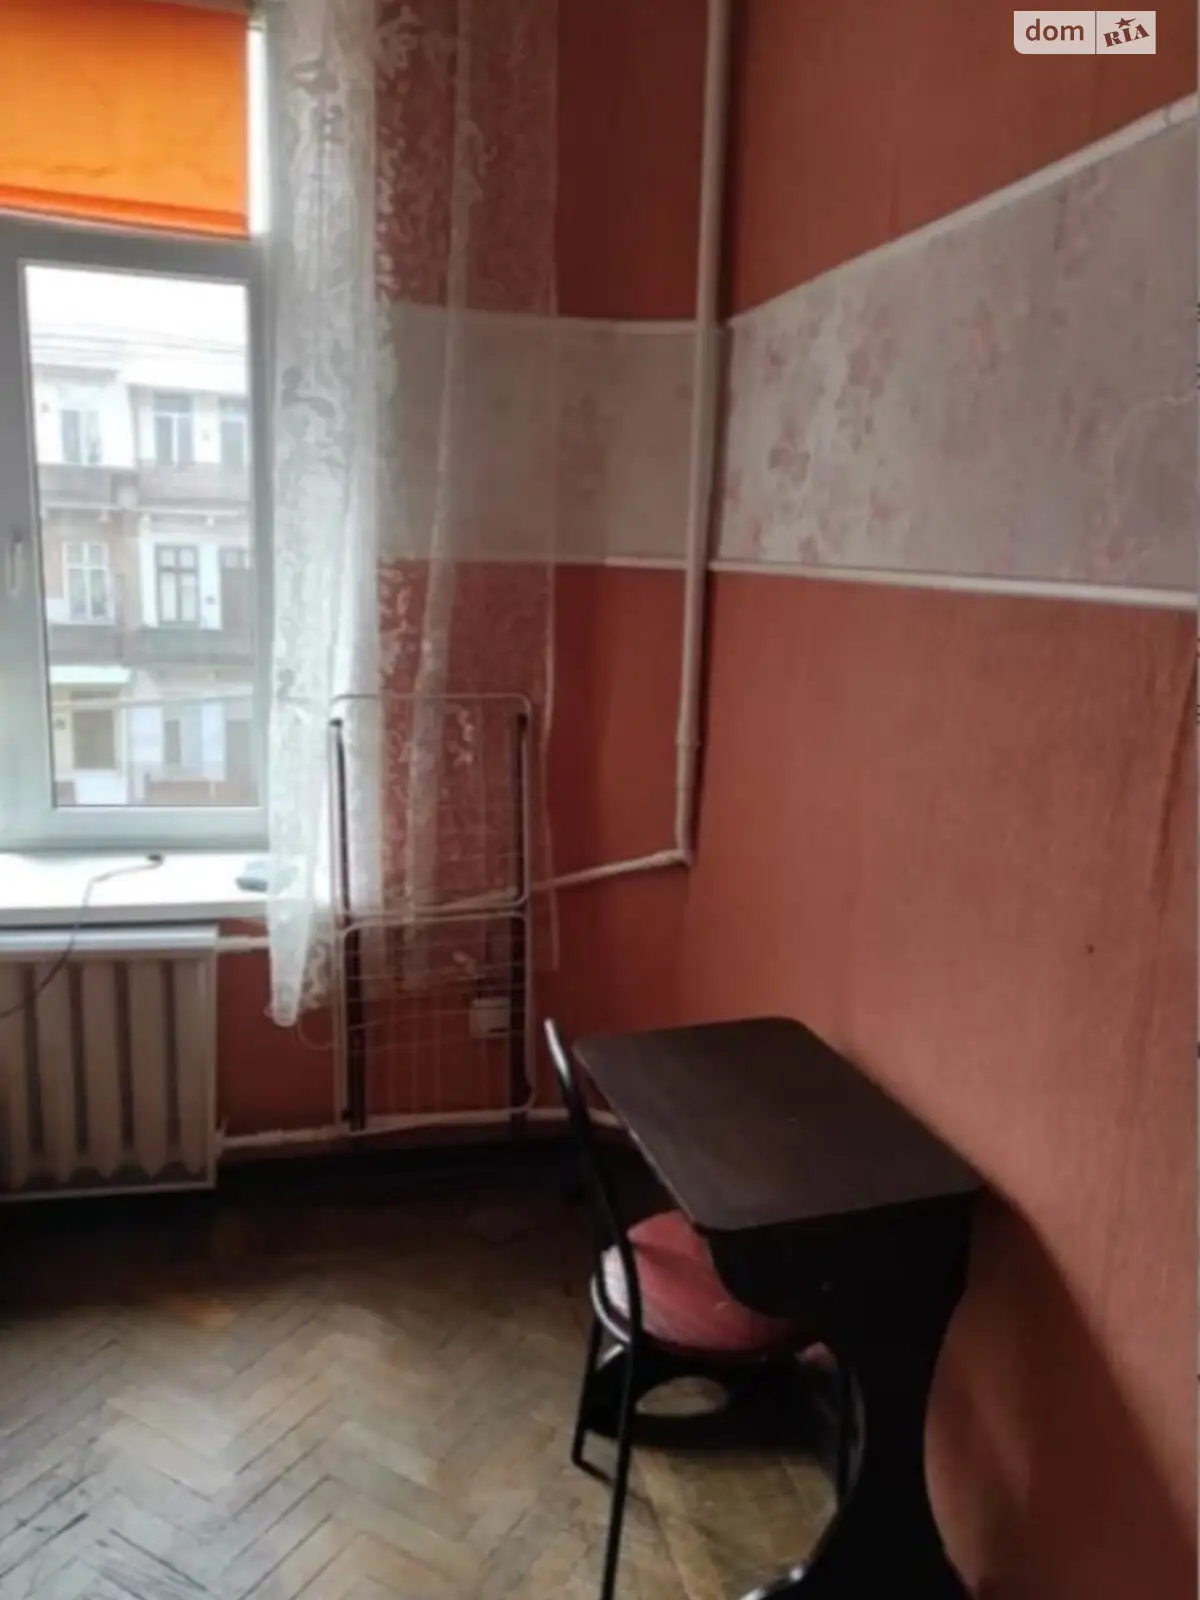 Продается комната 14 кв. м в Одессе, цена: 10000 $ - фото 1